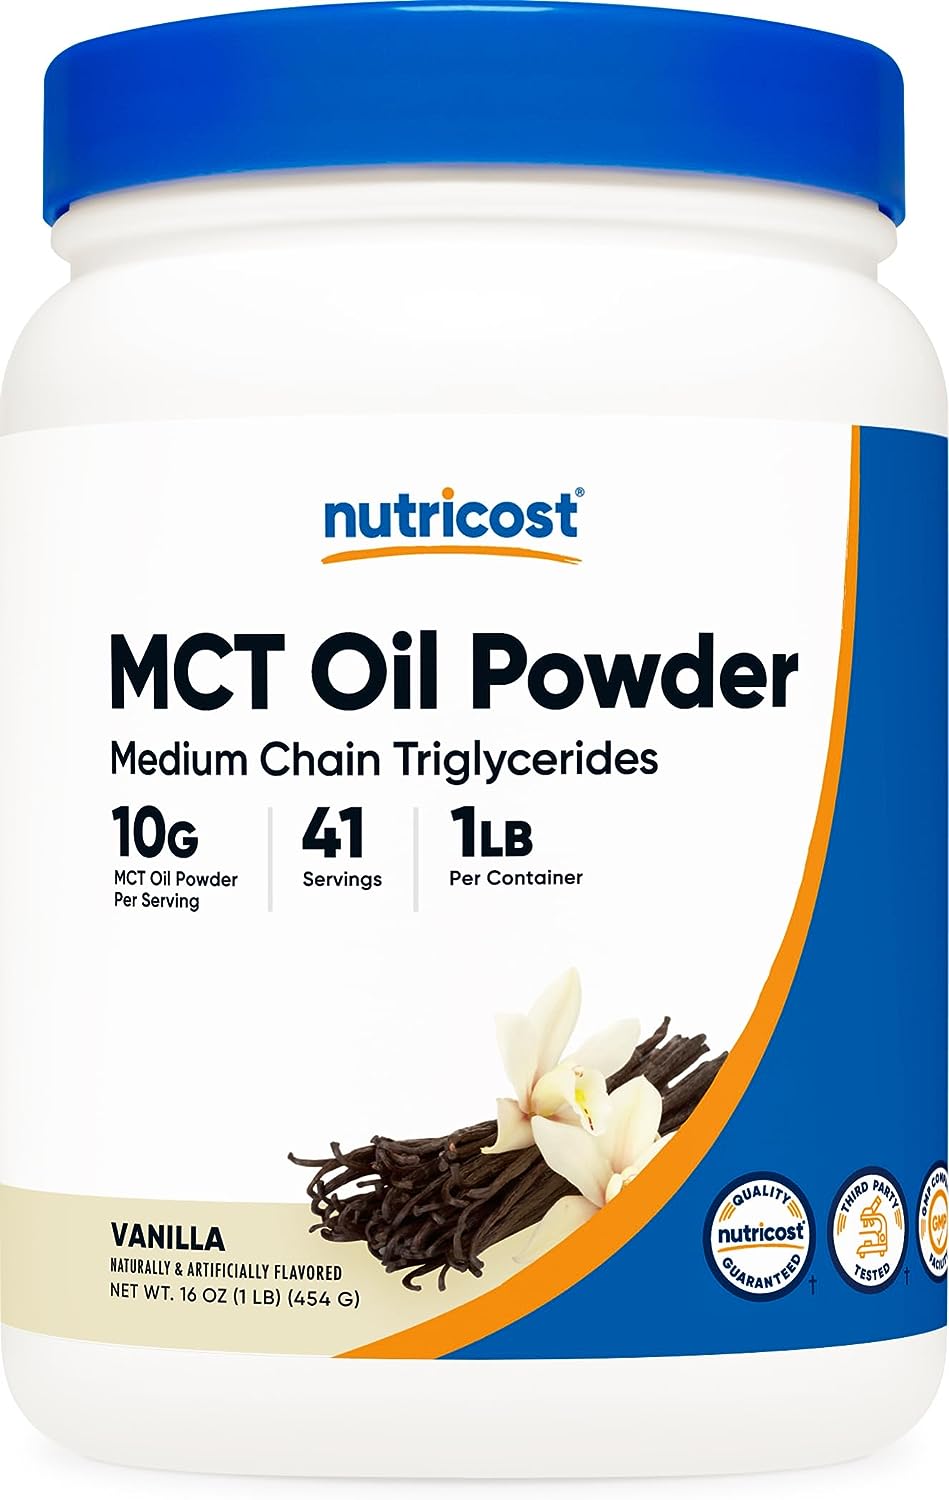 Nutricost Premium MCT Oil Powder (, Vanilla) - Best for Keto, Ketosis, and Ketogenic Diets - Zero Net Carbs, Non-GMO and Gluten Free, Medium Chain Triglyceride